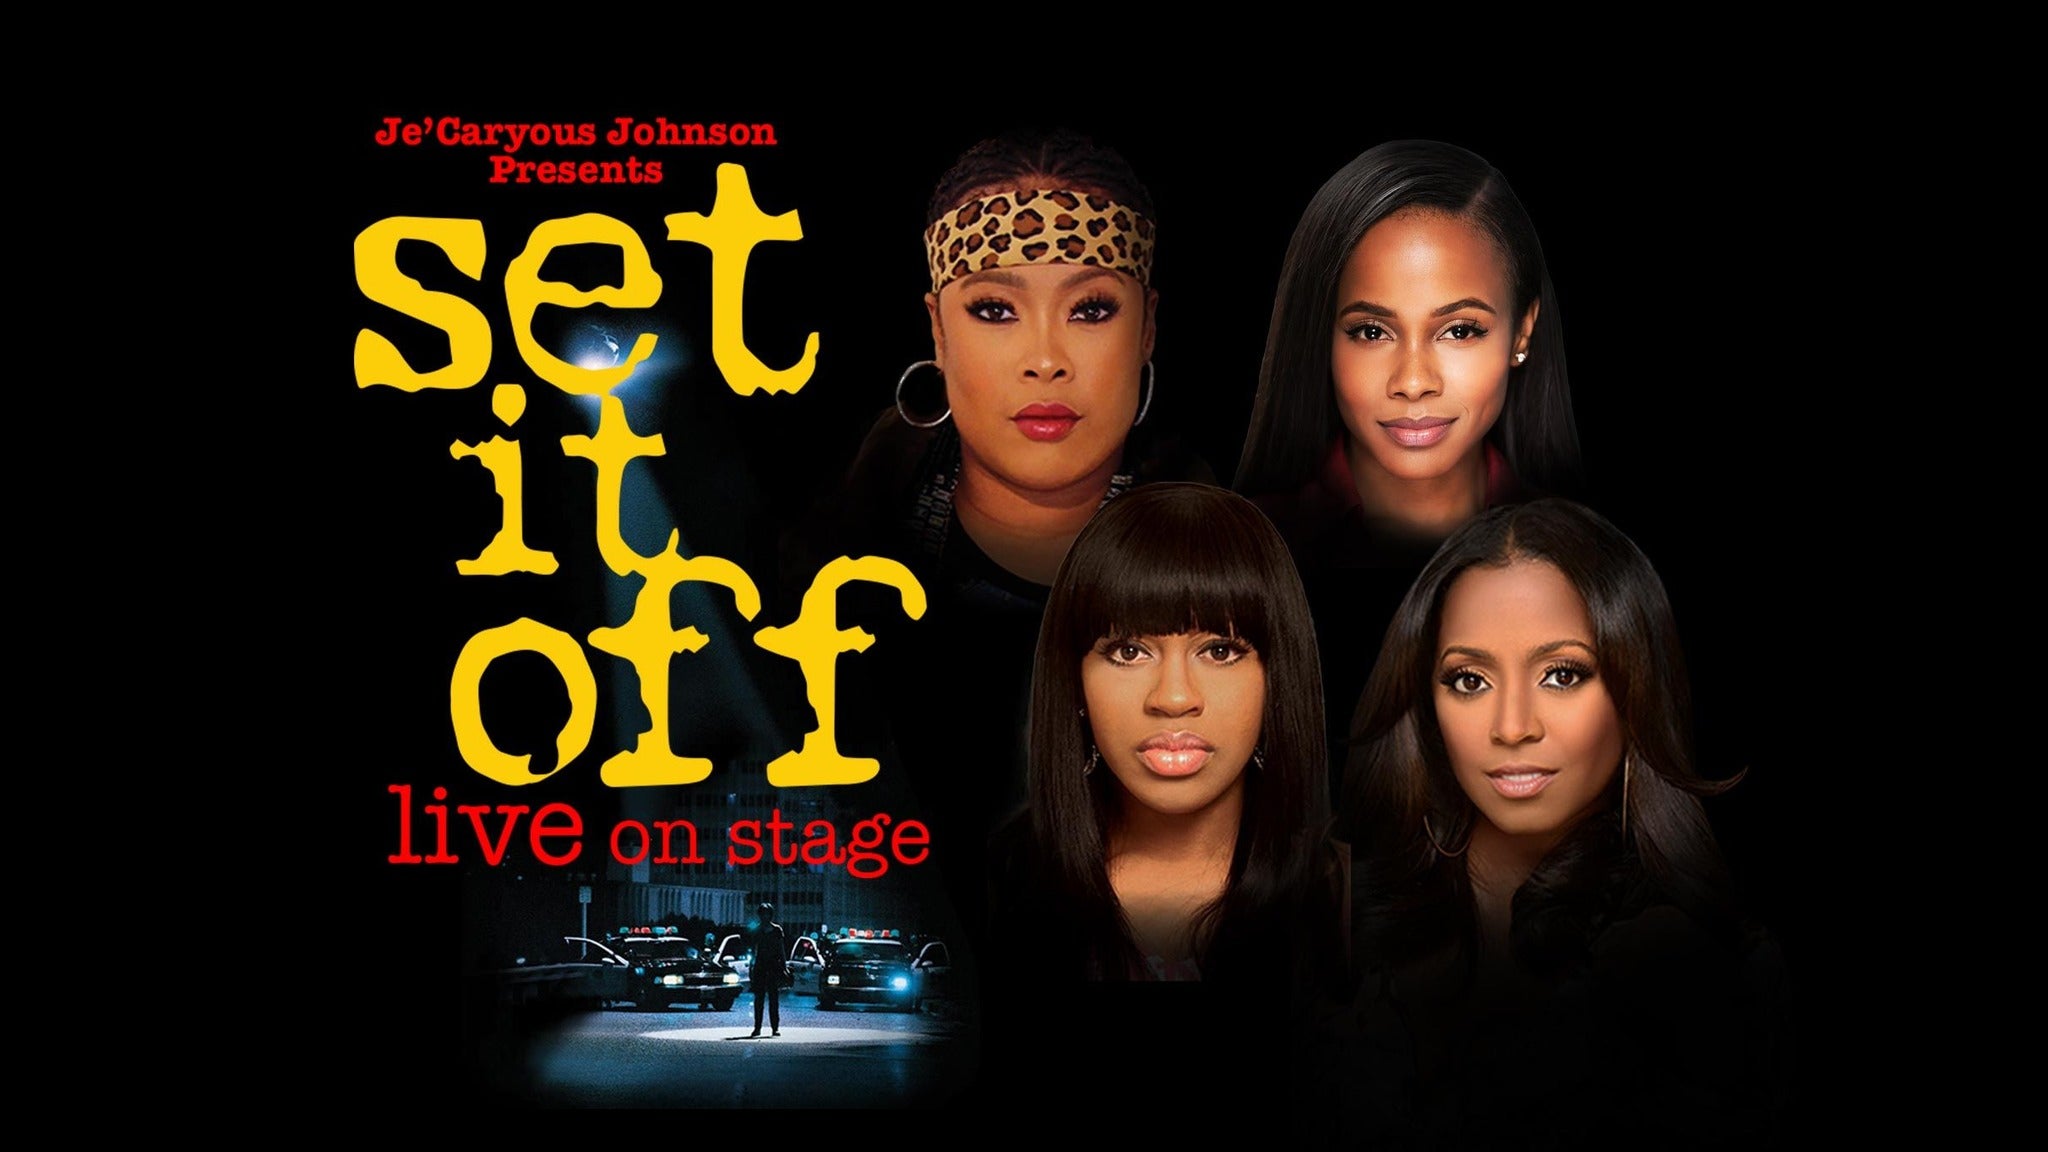 Je'Caryous Johnson Presents "Set It Off" in Philadelphia promo photo for Official Platinum presale offer code